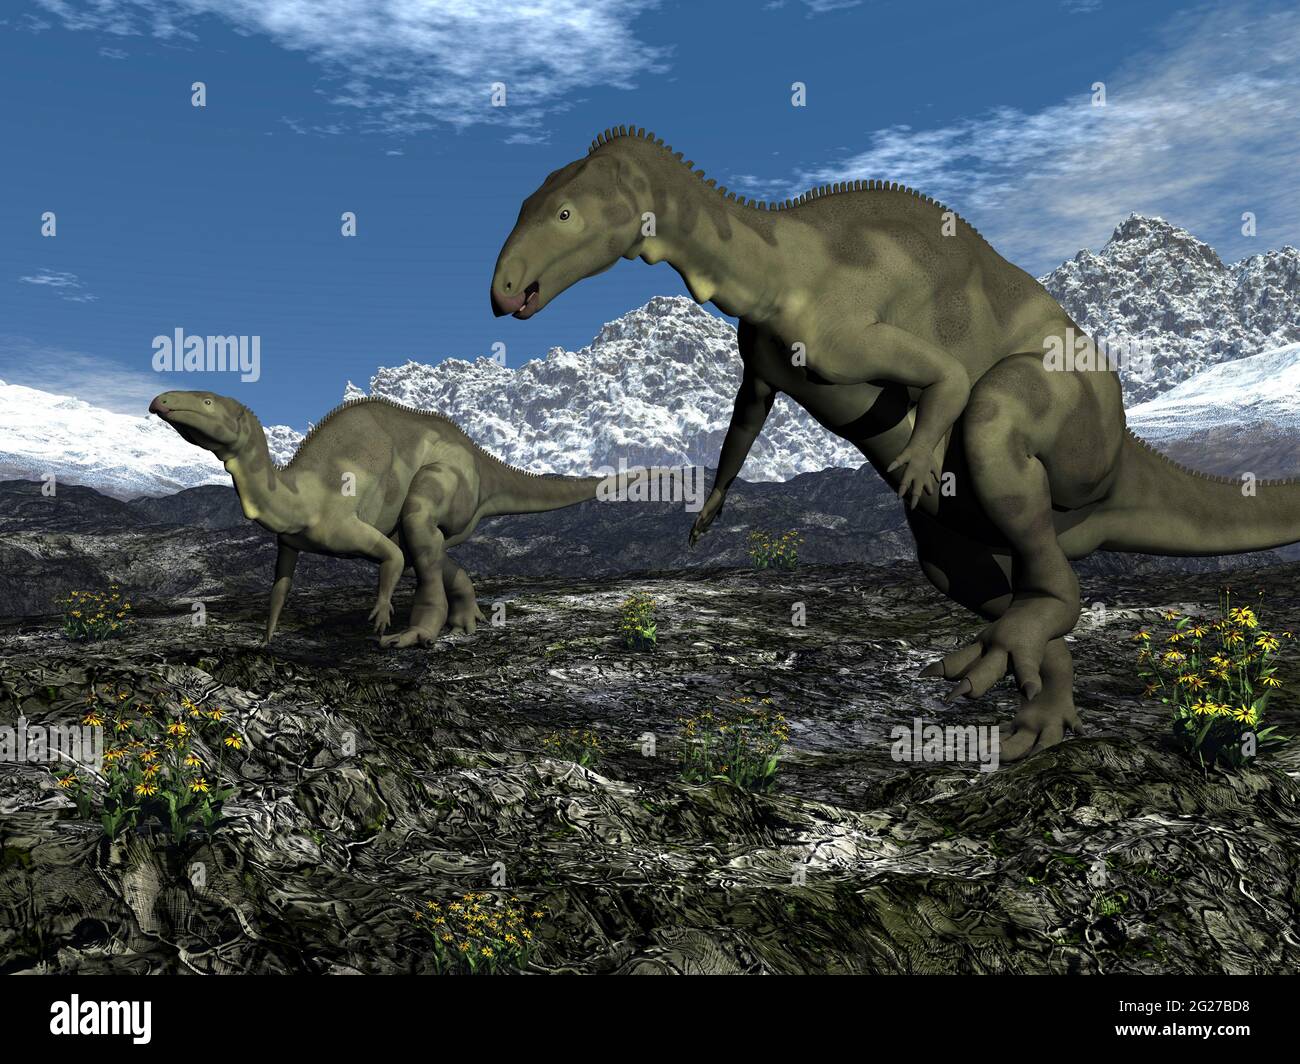 Two Camptosaurus dinosaurs walking together. Stock Photo